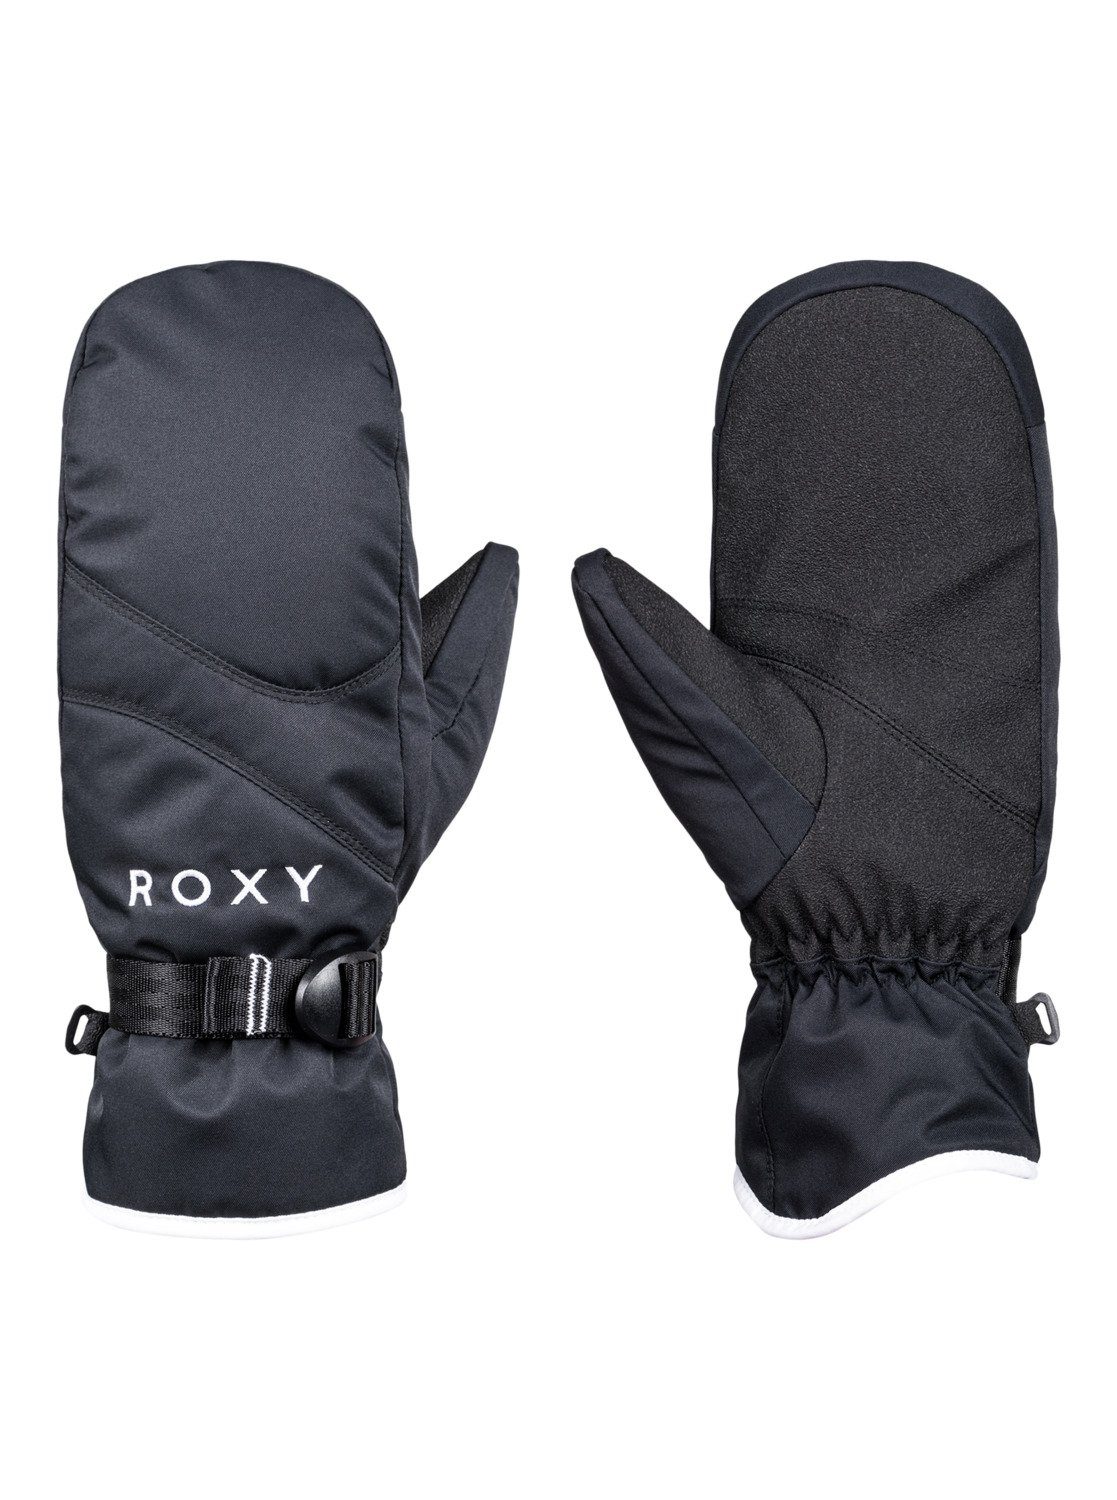 ROXY Snowboardhandschuhe Black Jetty Roxy True